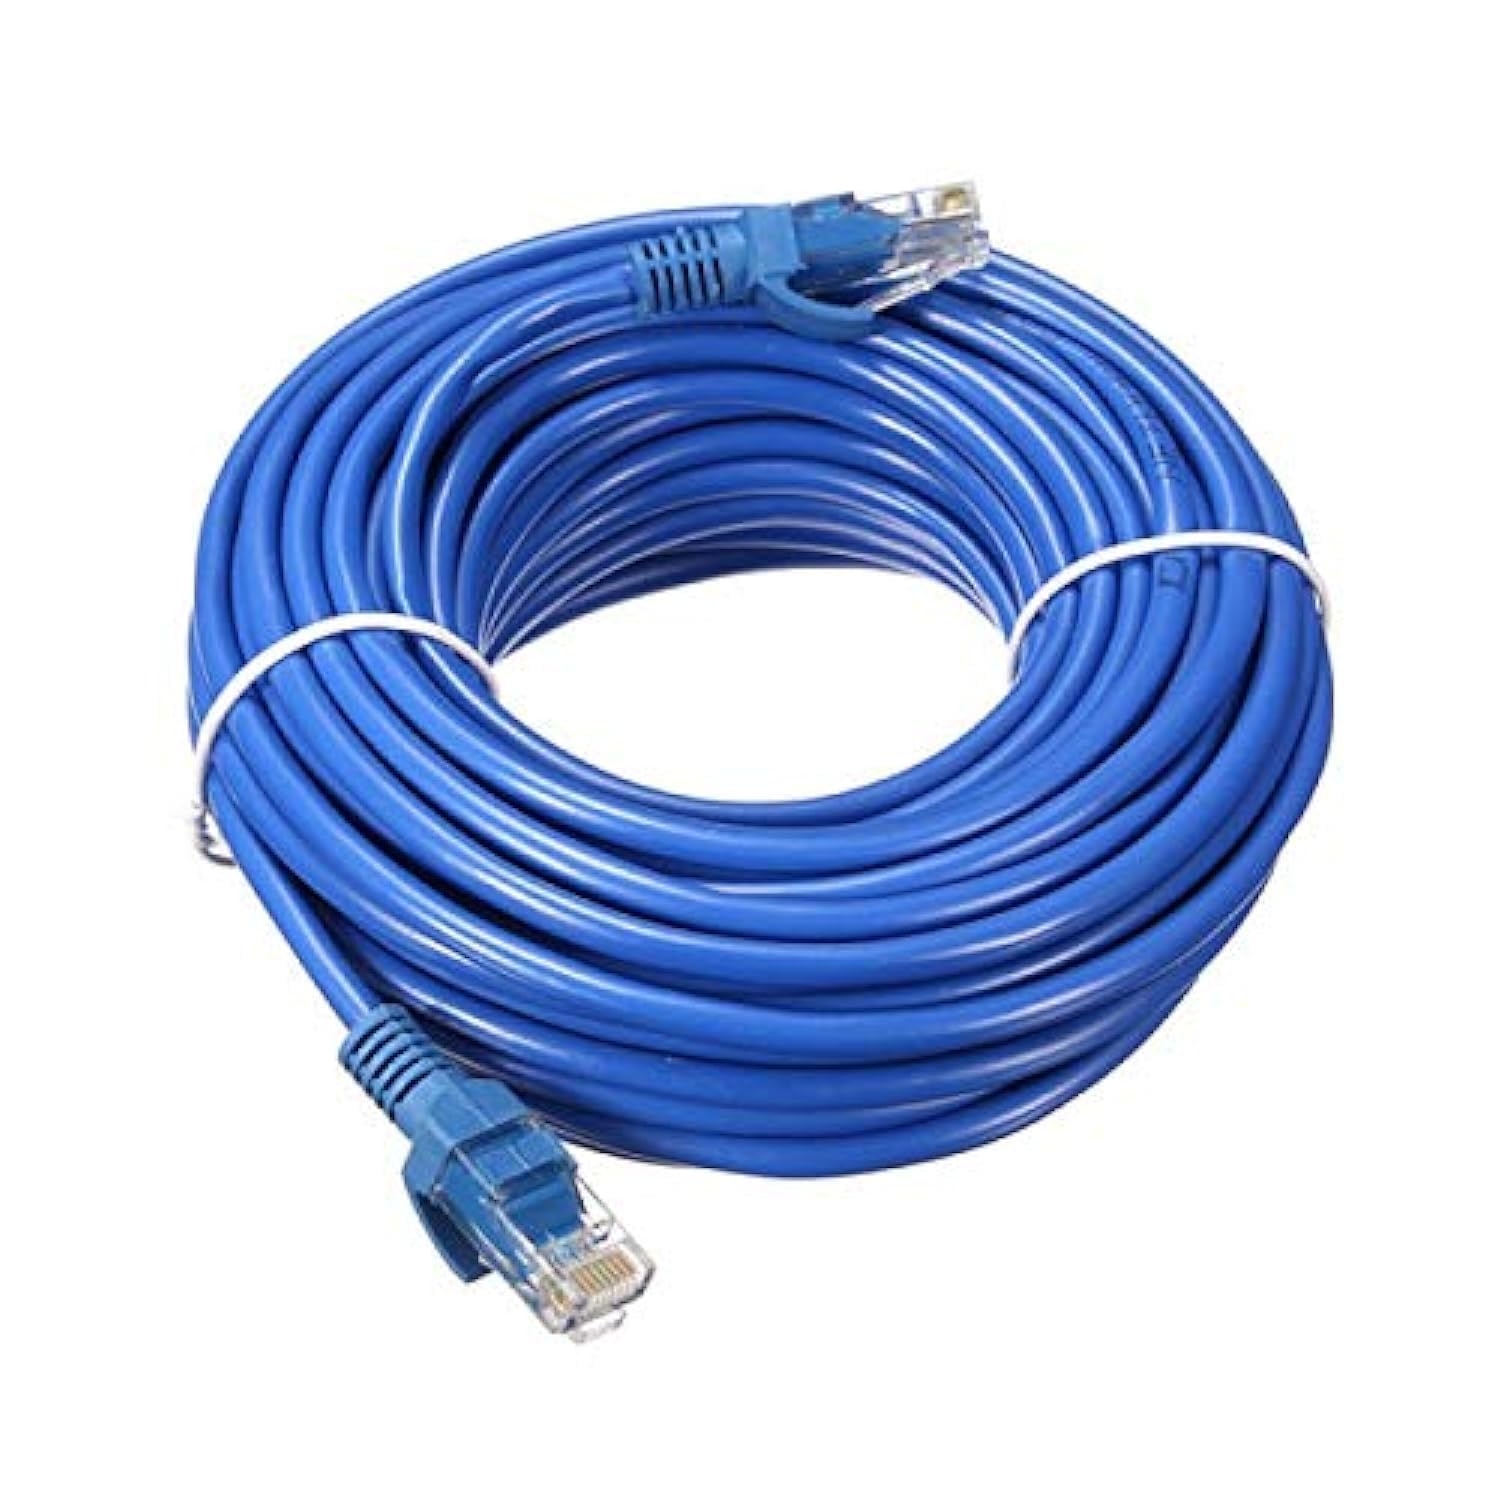 ANDTRONICS CAT-6 Snagless Network RJ45 Ethernet Patch LAN Cable CAT6-15M / 45 ft - Blue